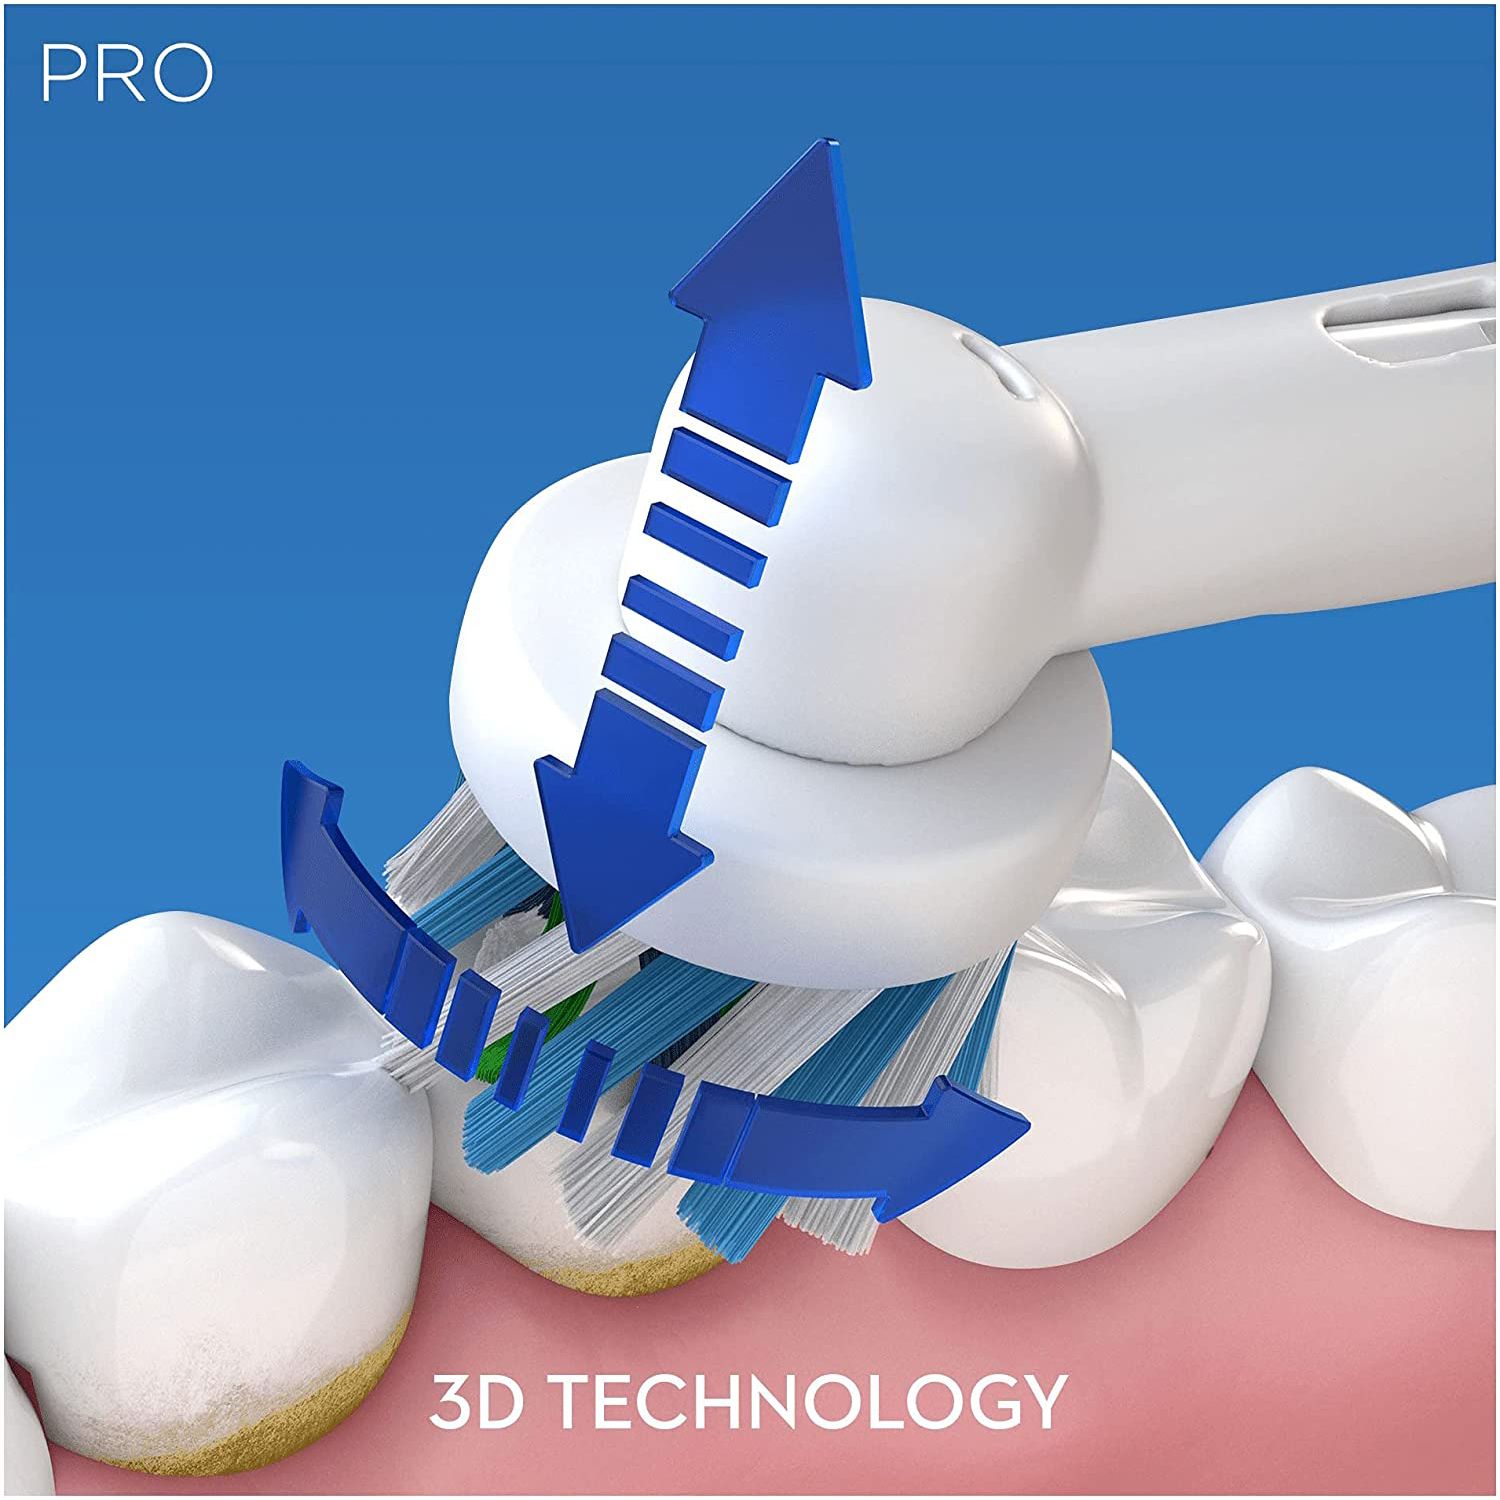 مسواک برقی اورال-بی مدل Pro 650 به همراه خمیر دندان اورال-بی مدل Expert حجم 75 میلی لیتر -  - 4